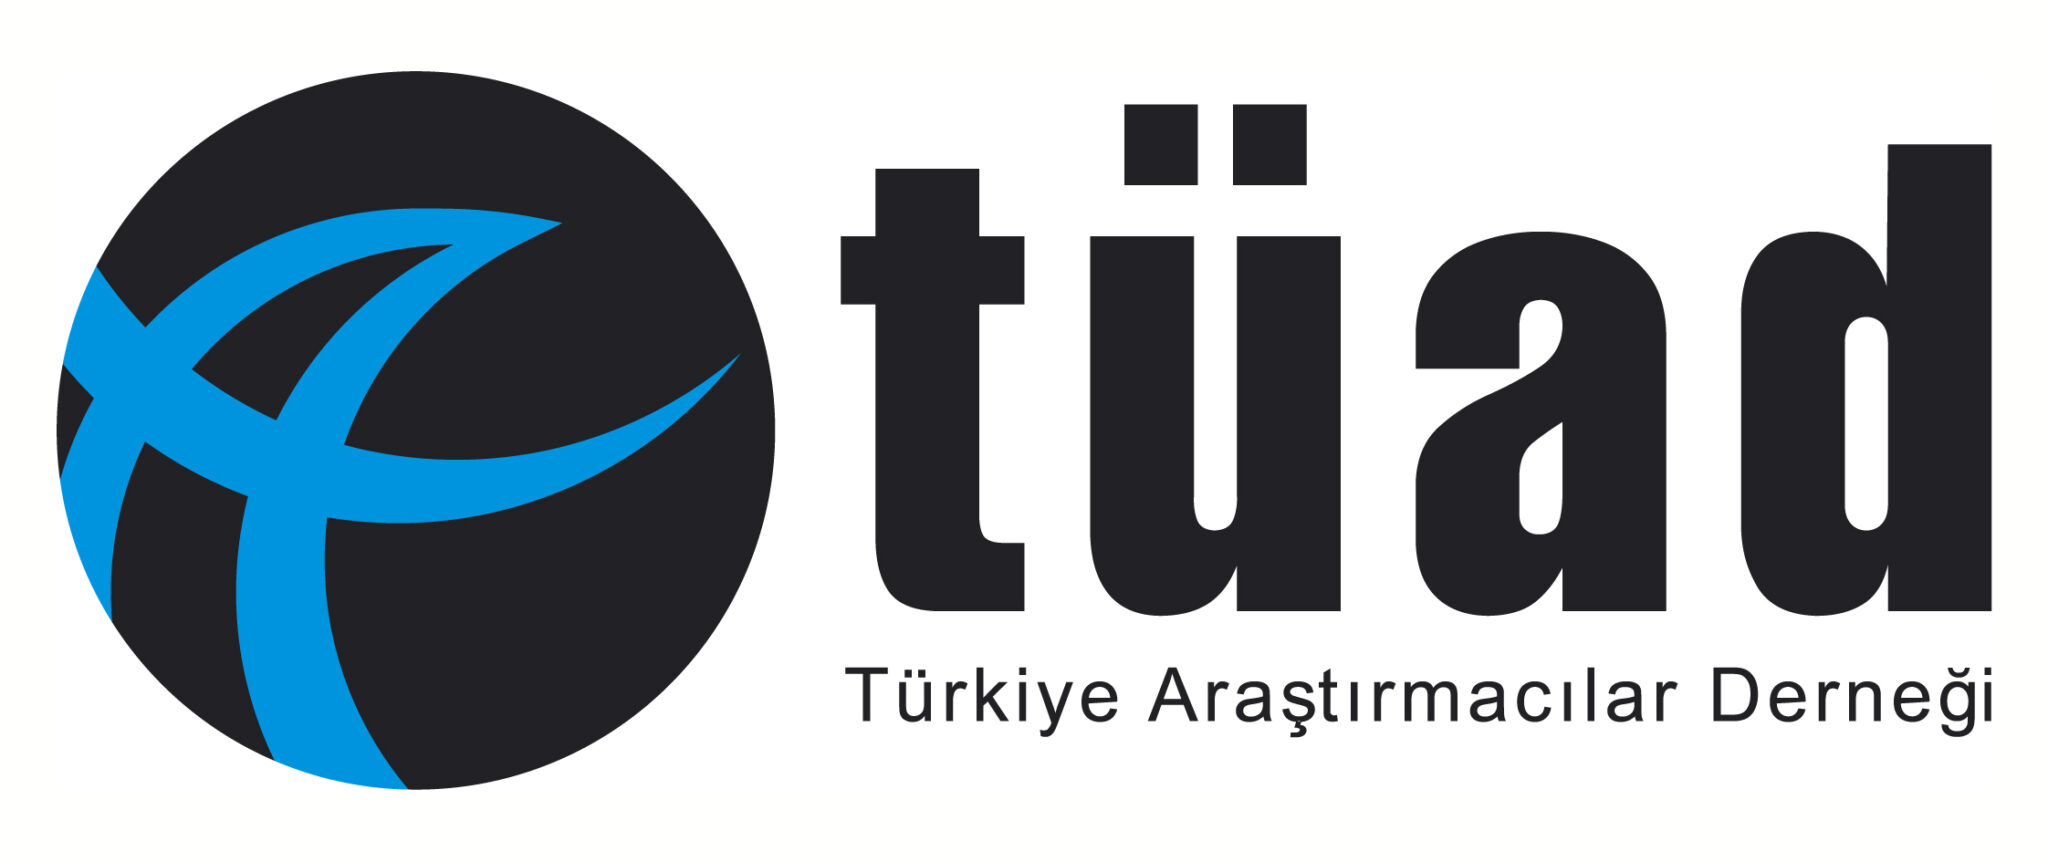 Medium turkey. Akademetre лого в векторе. Turkey Technology logo.